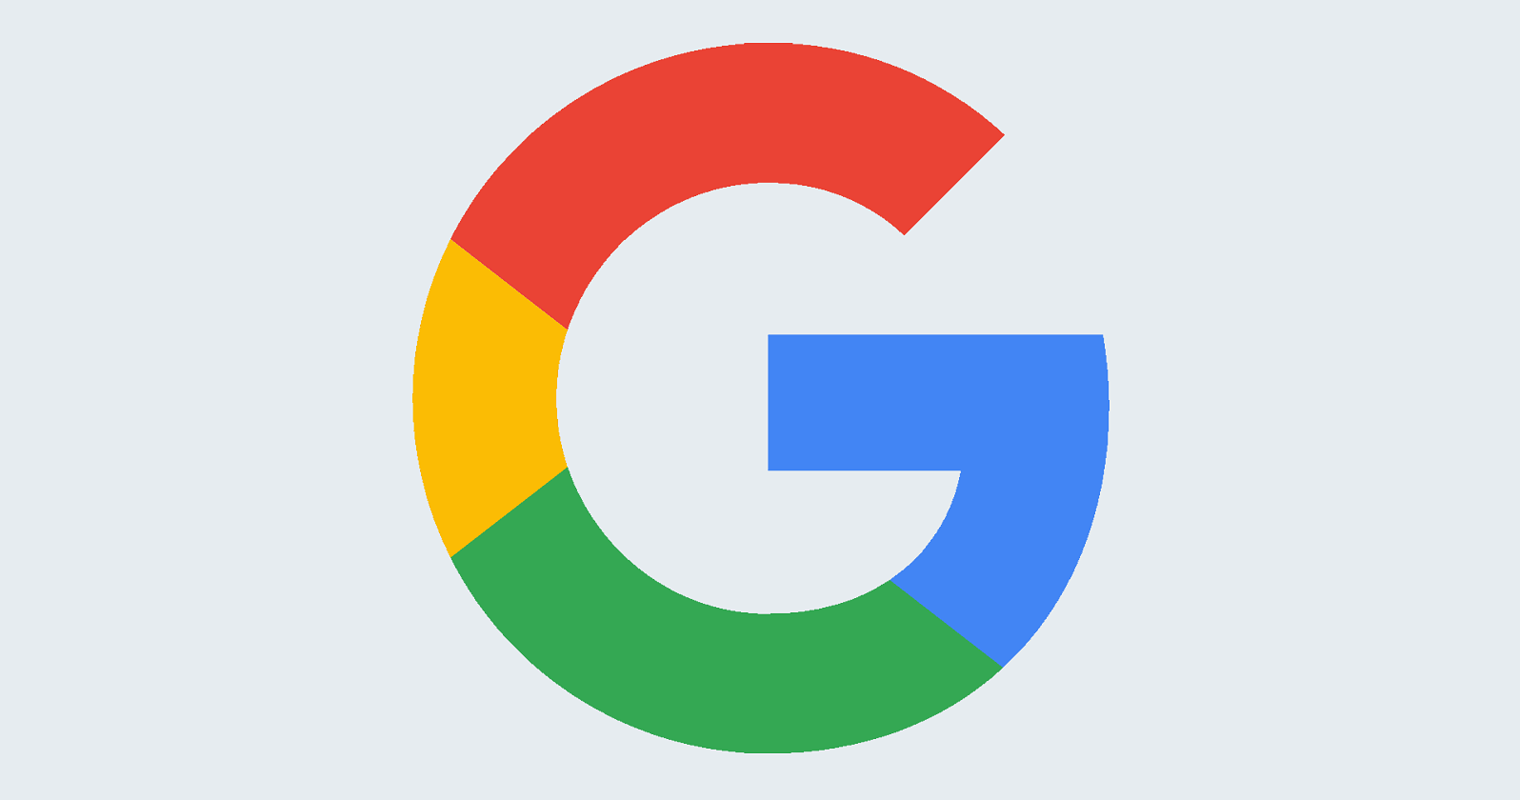 Google May Face U.S. Antitrust Lawsuits